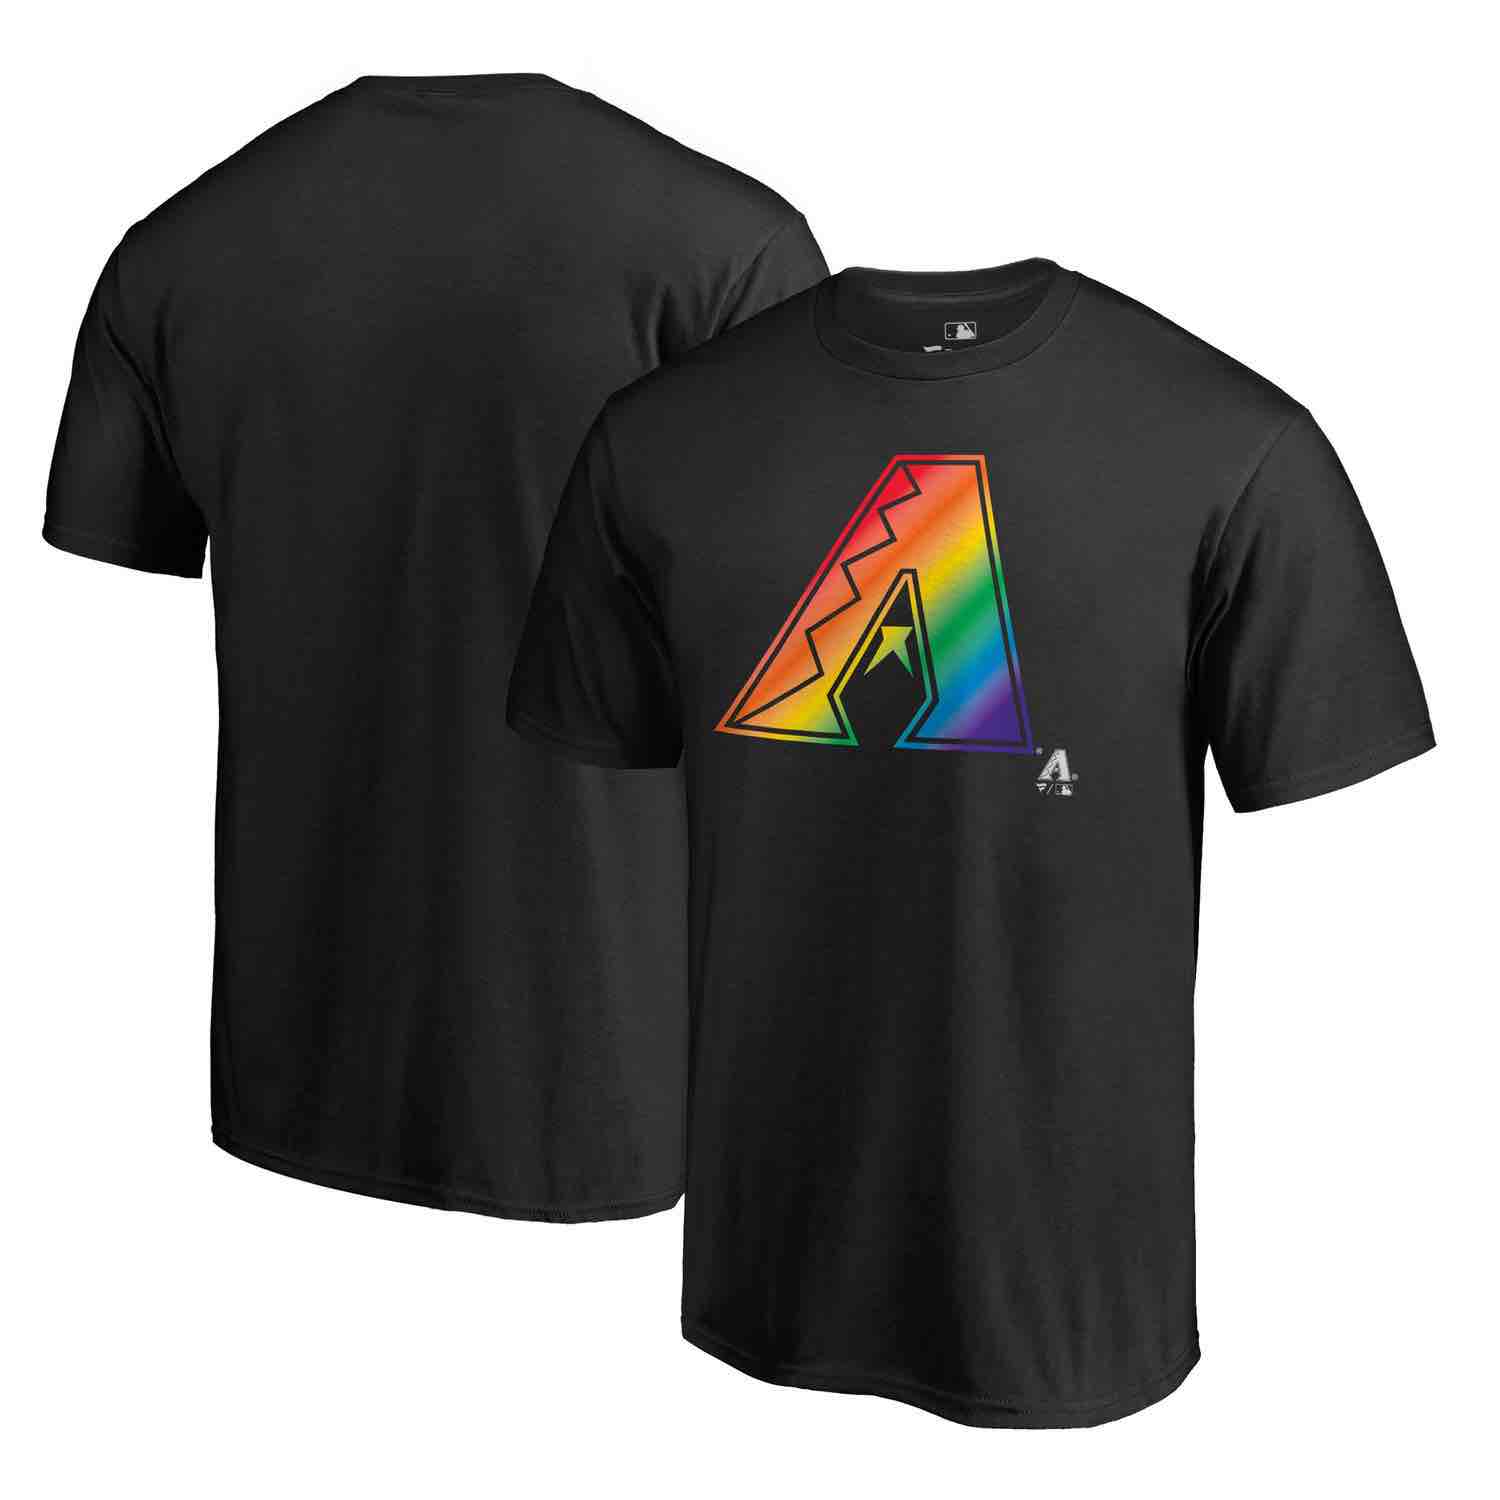 Mens Arizona Diamondbacks Fanatics Branded Pride Black T-Shirt